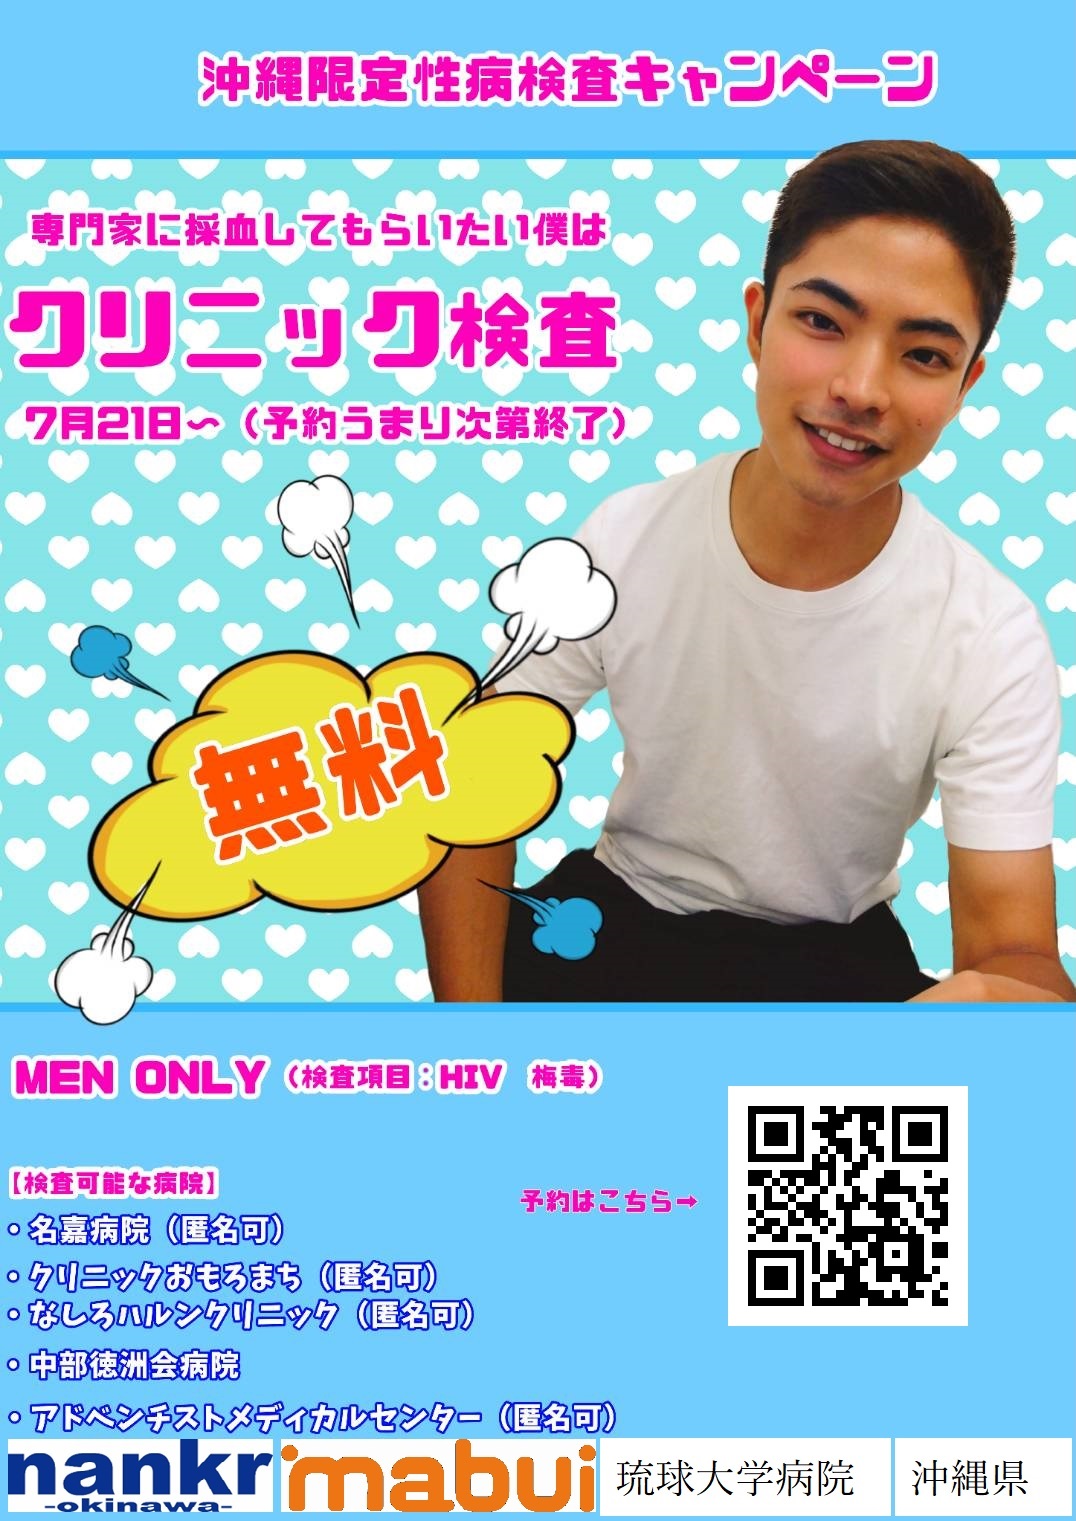 (8/1)HIV＆梅毒クリニック検査キャンペーン(無料/MEN ONLY)【nankr-OKINAWA-】